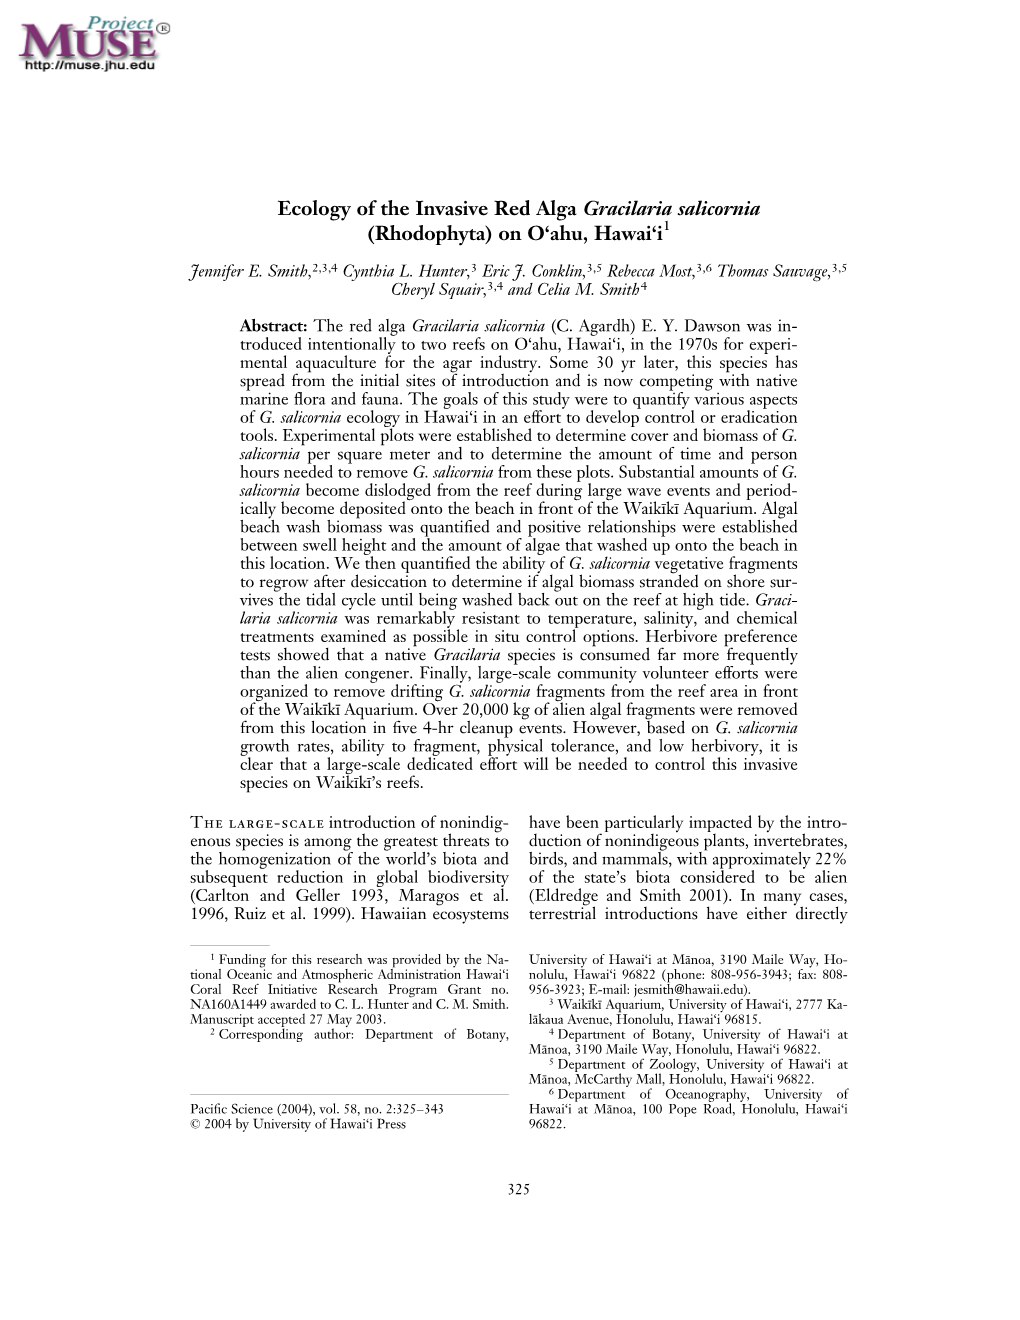 Ecology of the Invasive Red Alga Gracilaria Salicornia (Rhodophyta) on O‘Ahu, Hawai‘I1